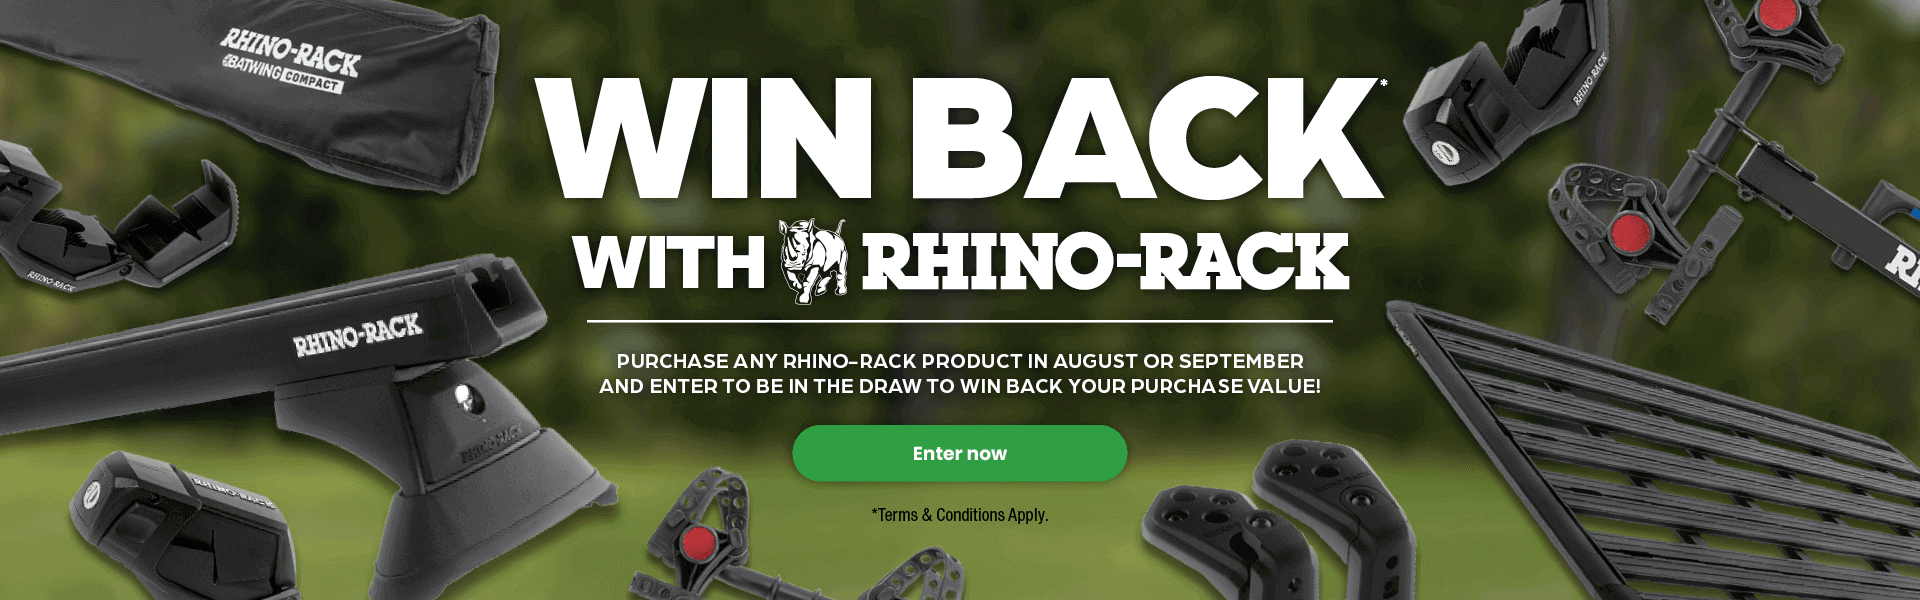 Win back with Rhino Rack 